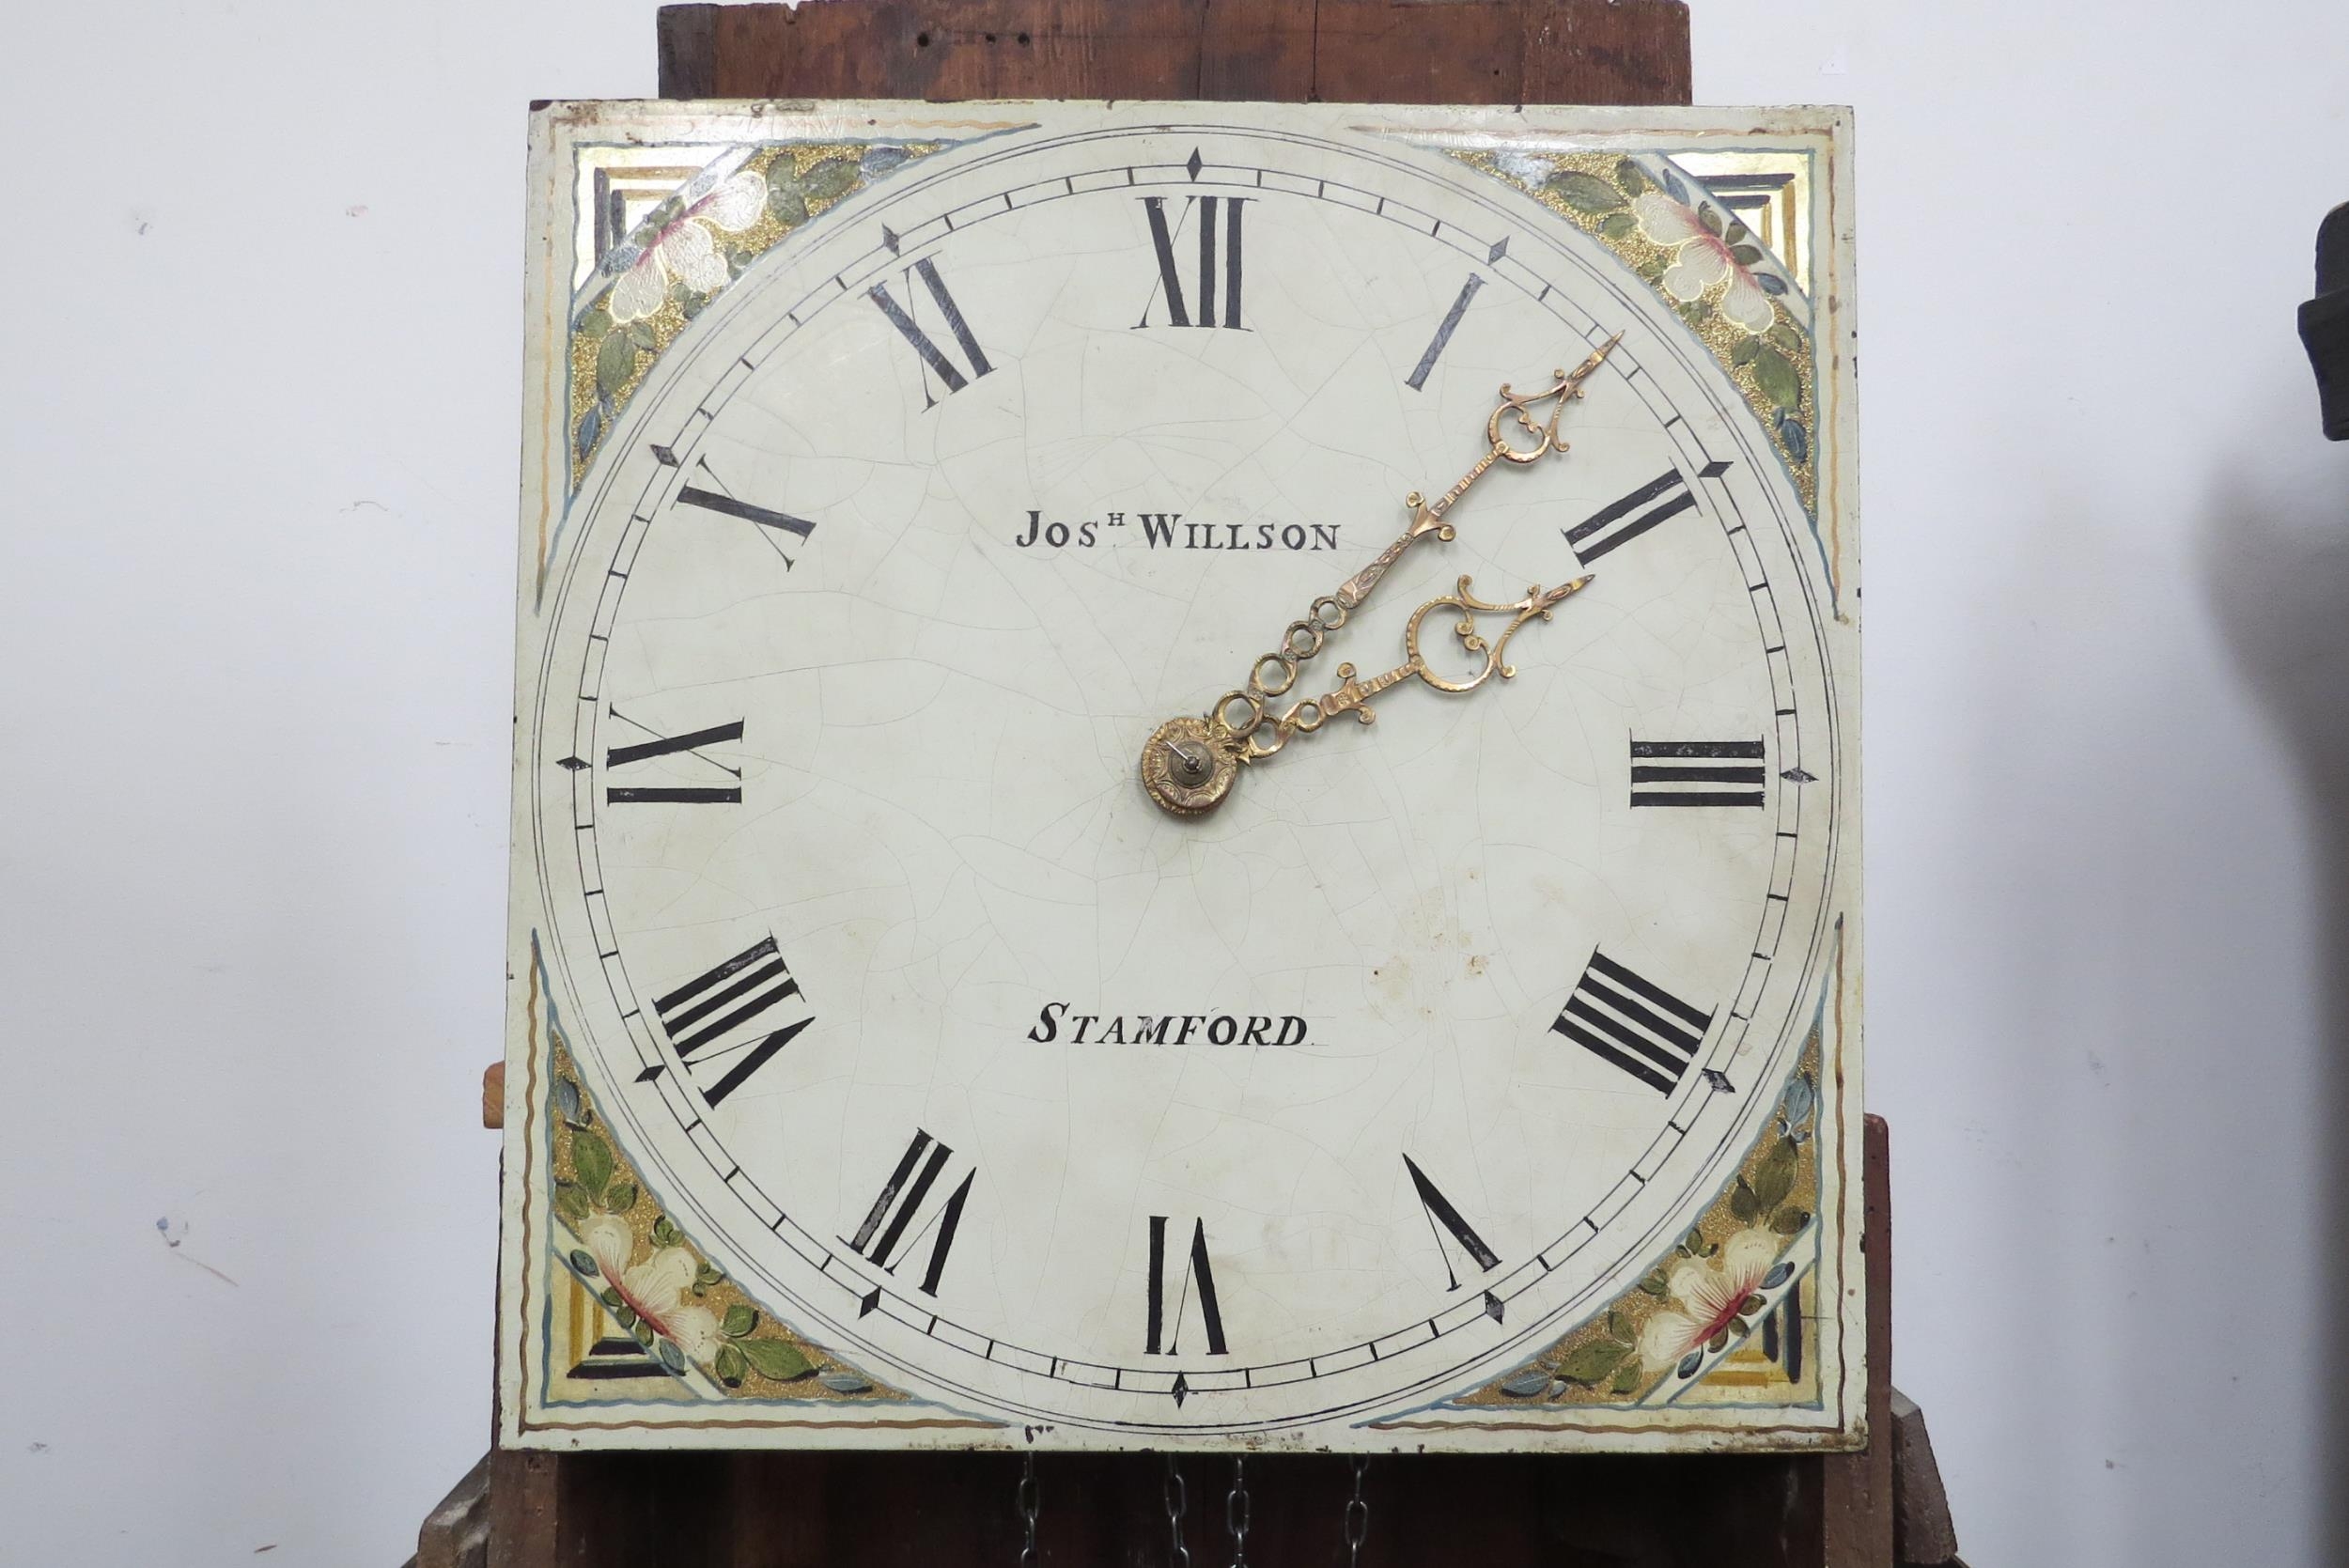 A Georgian mahogany shell inlay longcase clock by Josh Willson, Stamford, with weight. 206cm high - Image 6 of 8